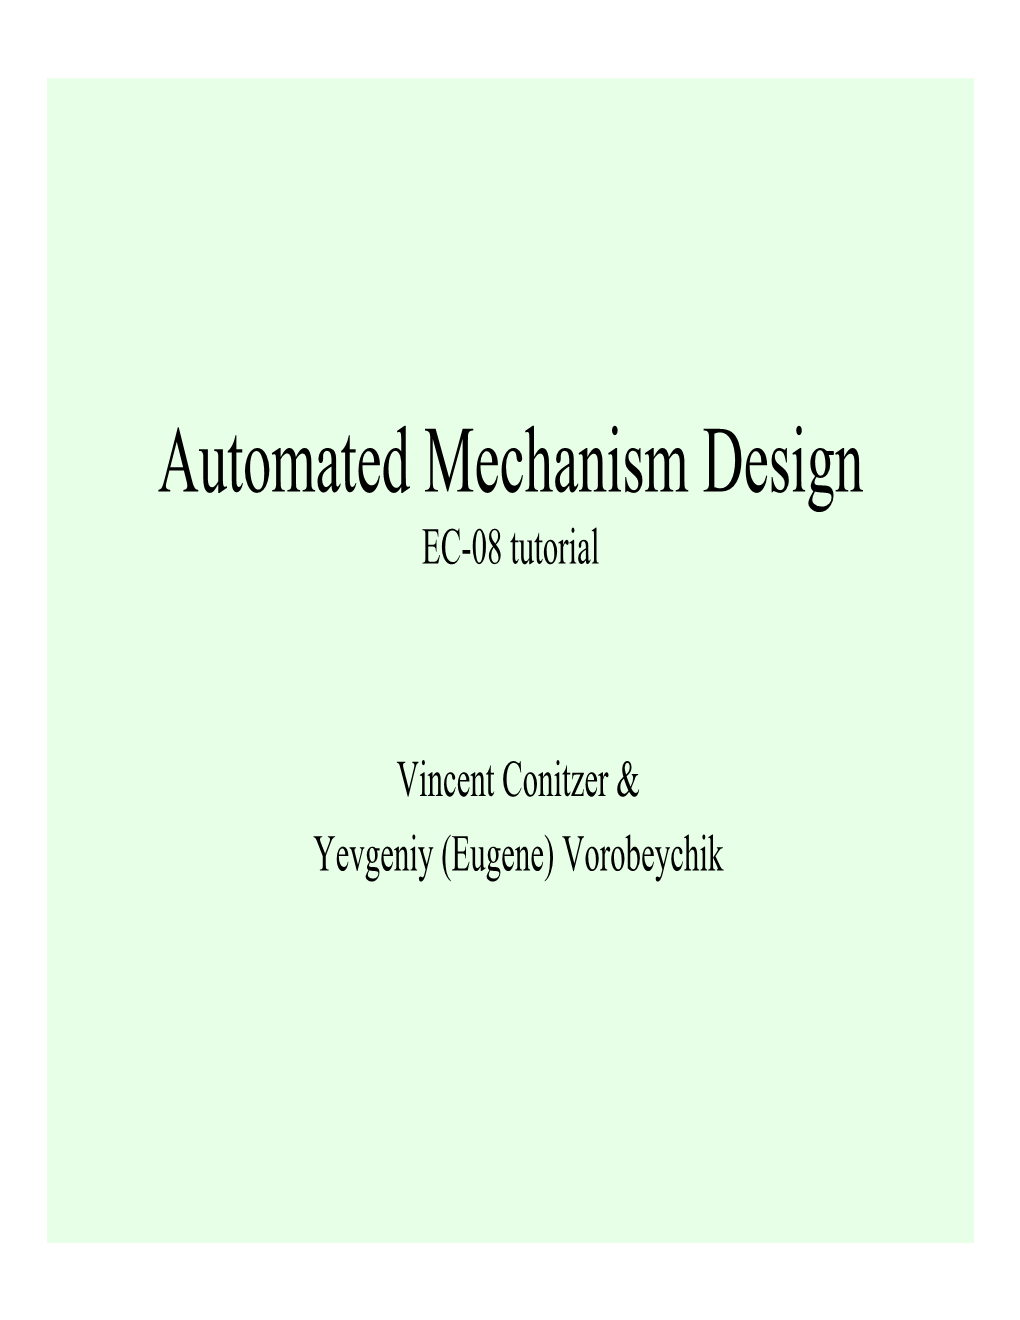 Automated Mechanism Design EC-08 Tutorial